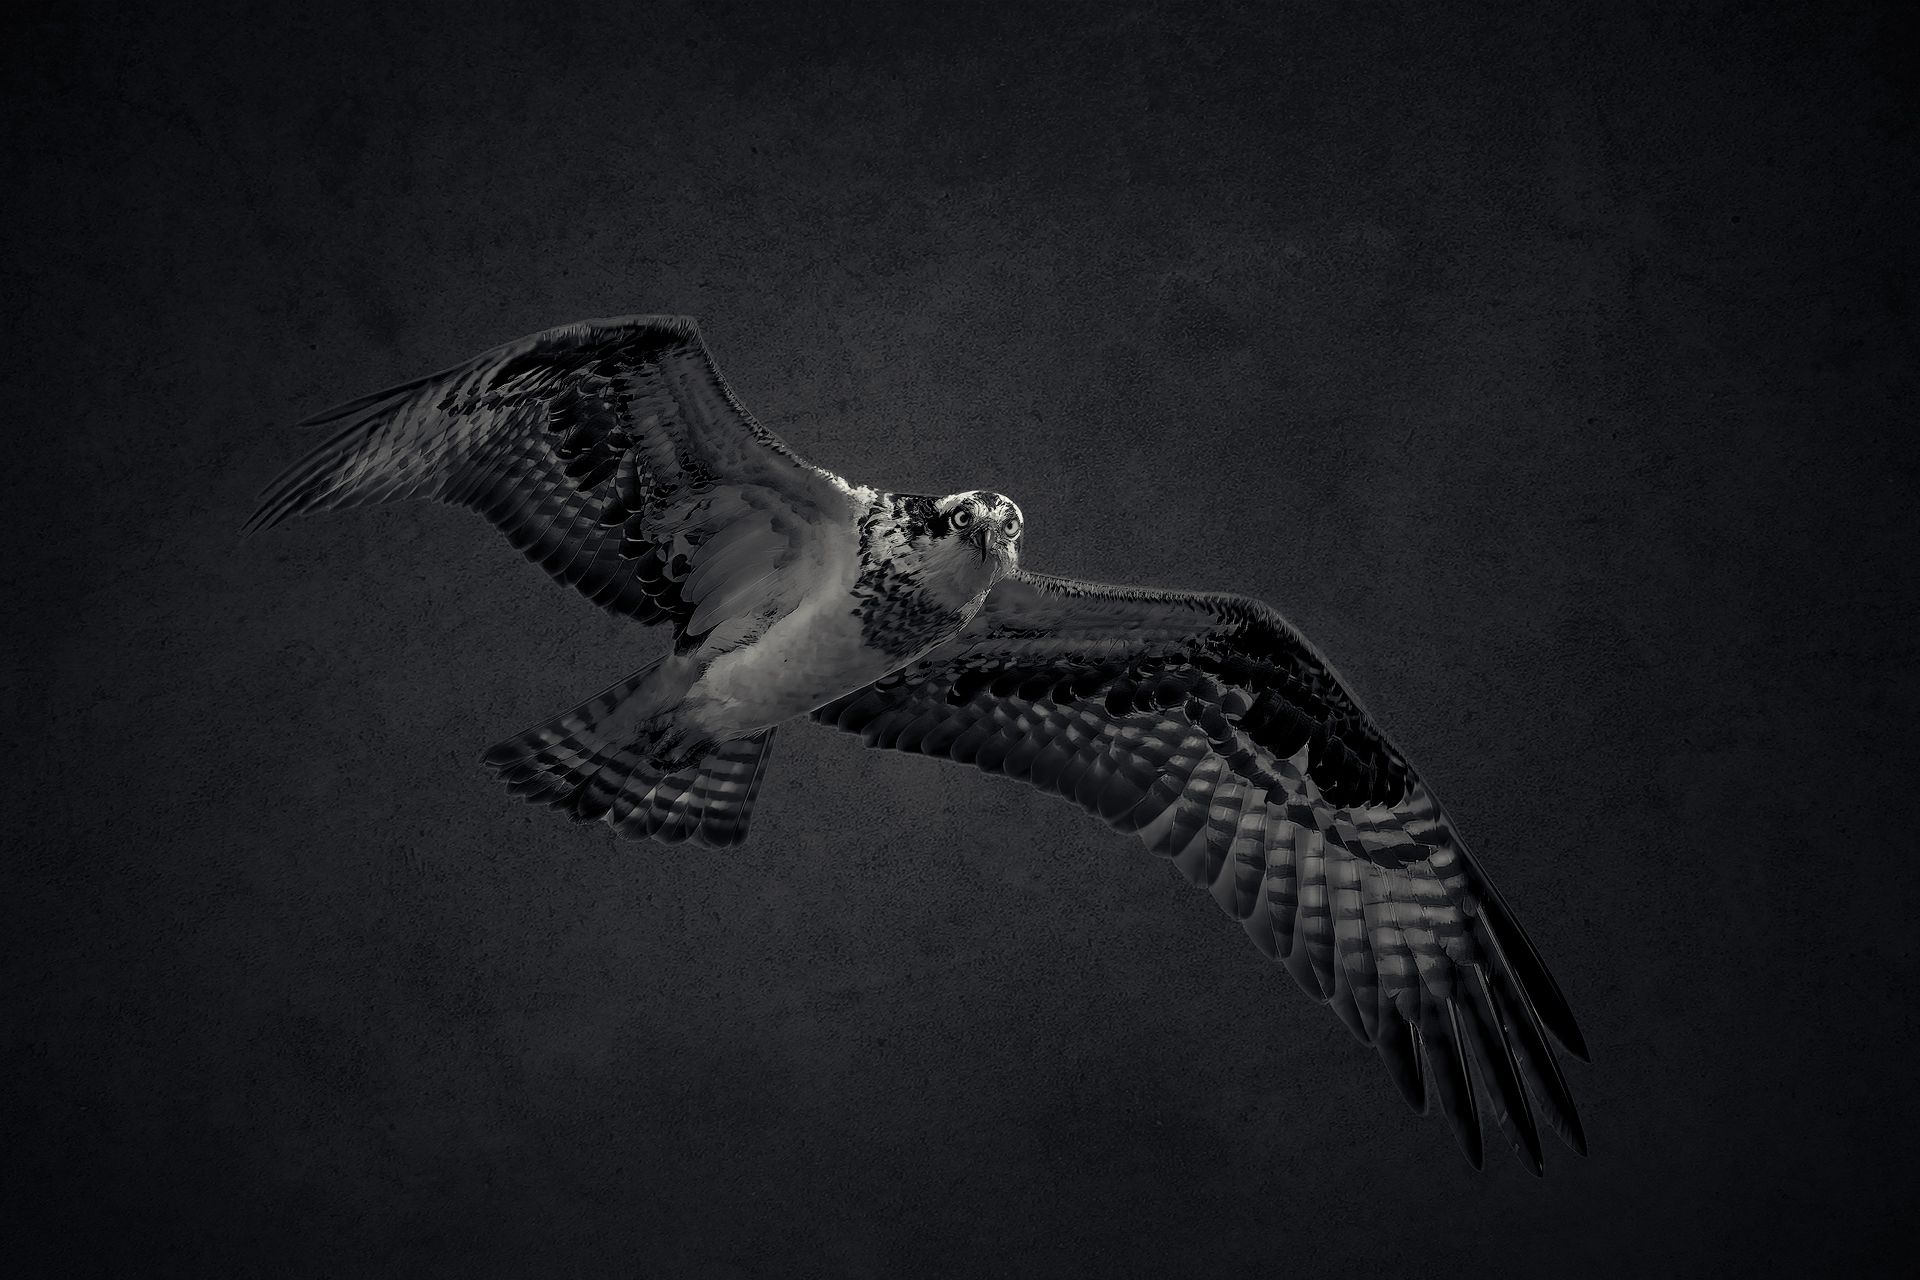 hawk, eagle, bird, animal, nature, monochrome, creative, portrait, Zhao Huapu